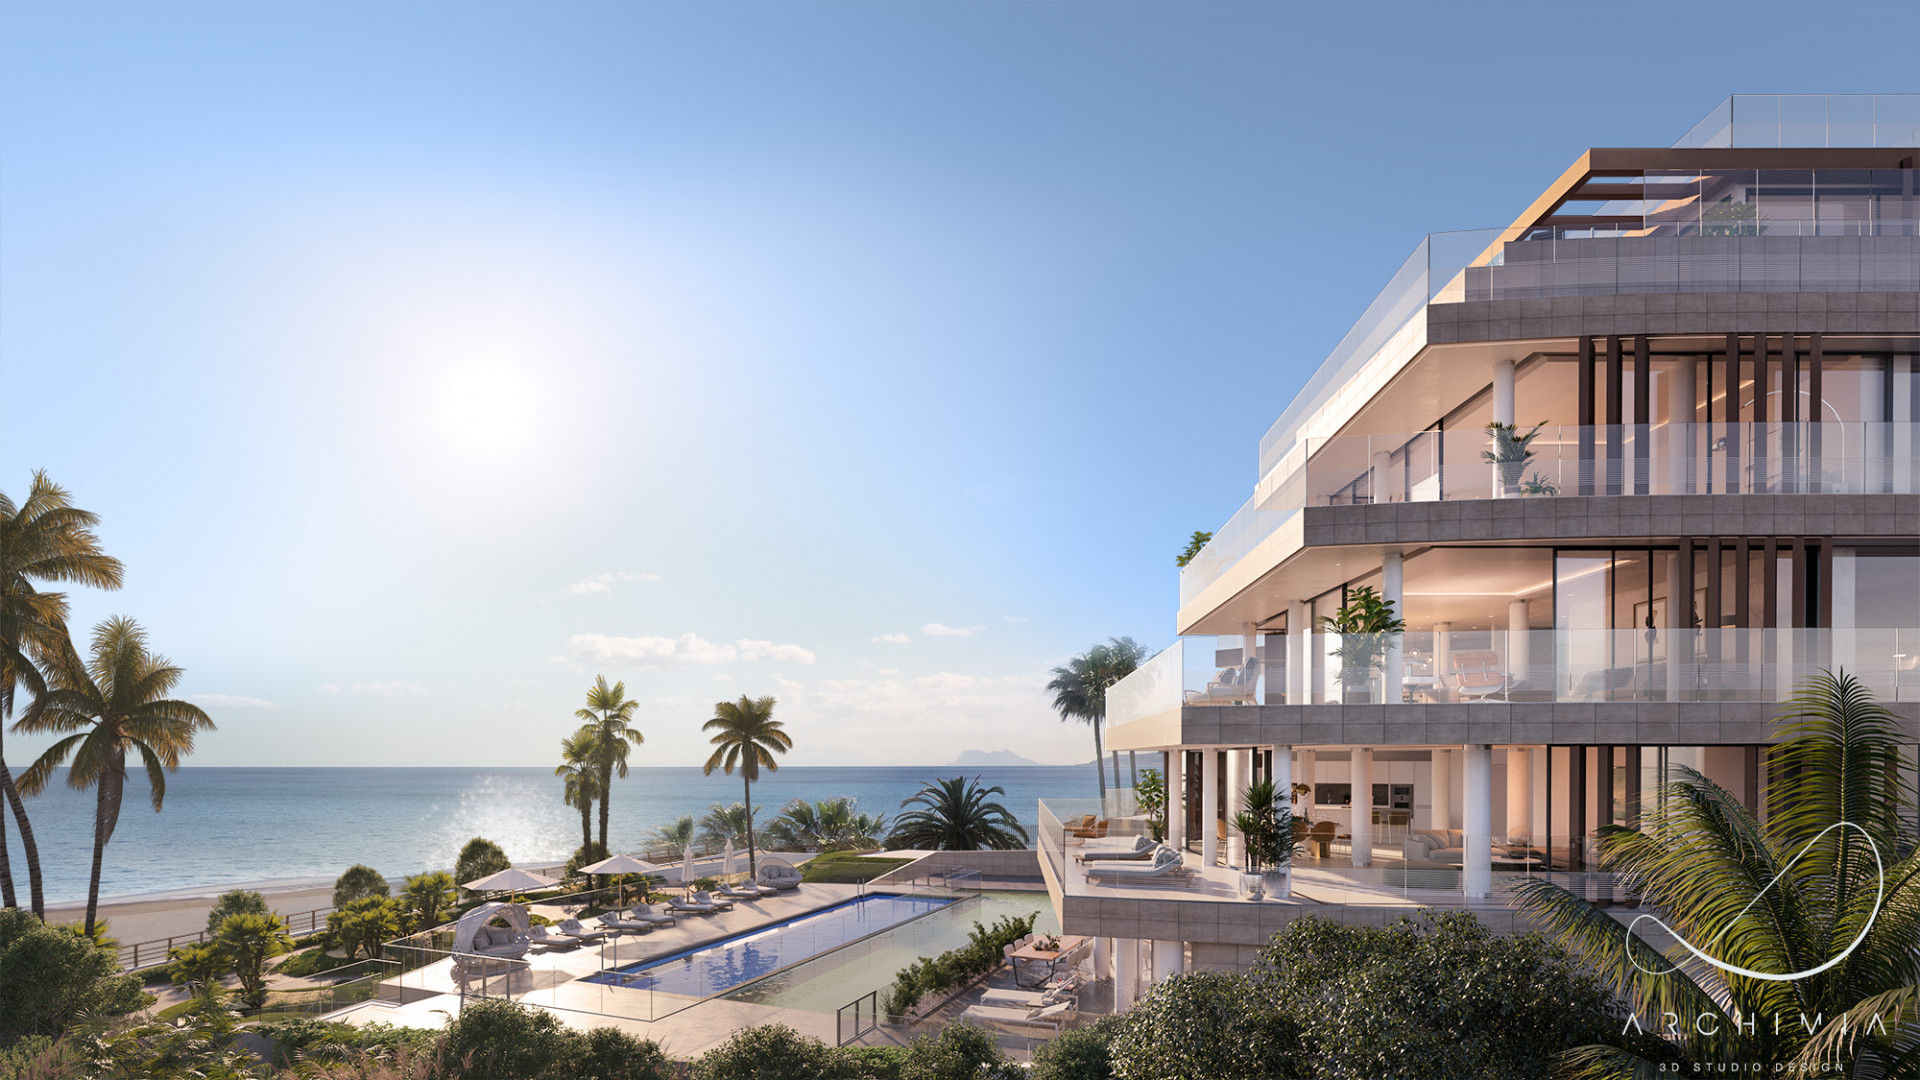 Beachfront luxury homes with stunning sea views